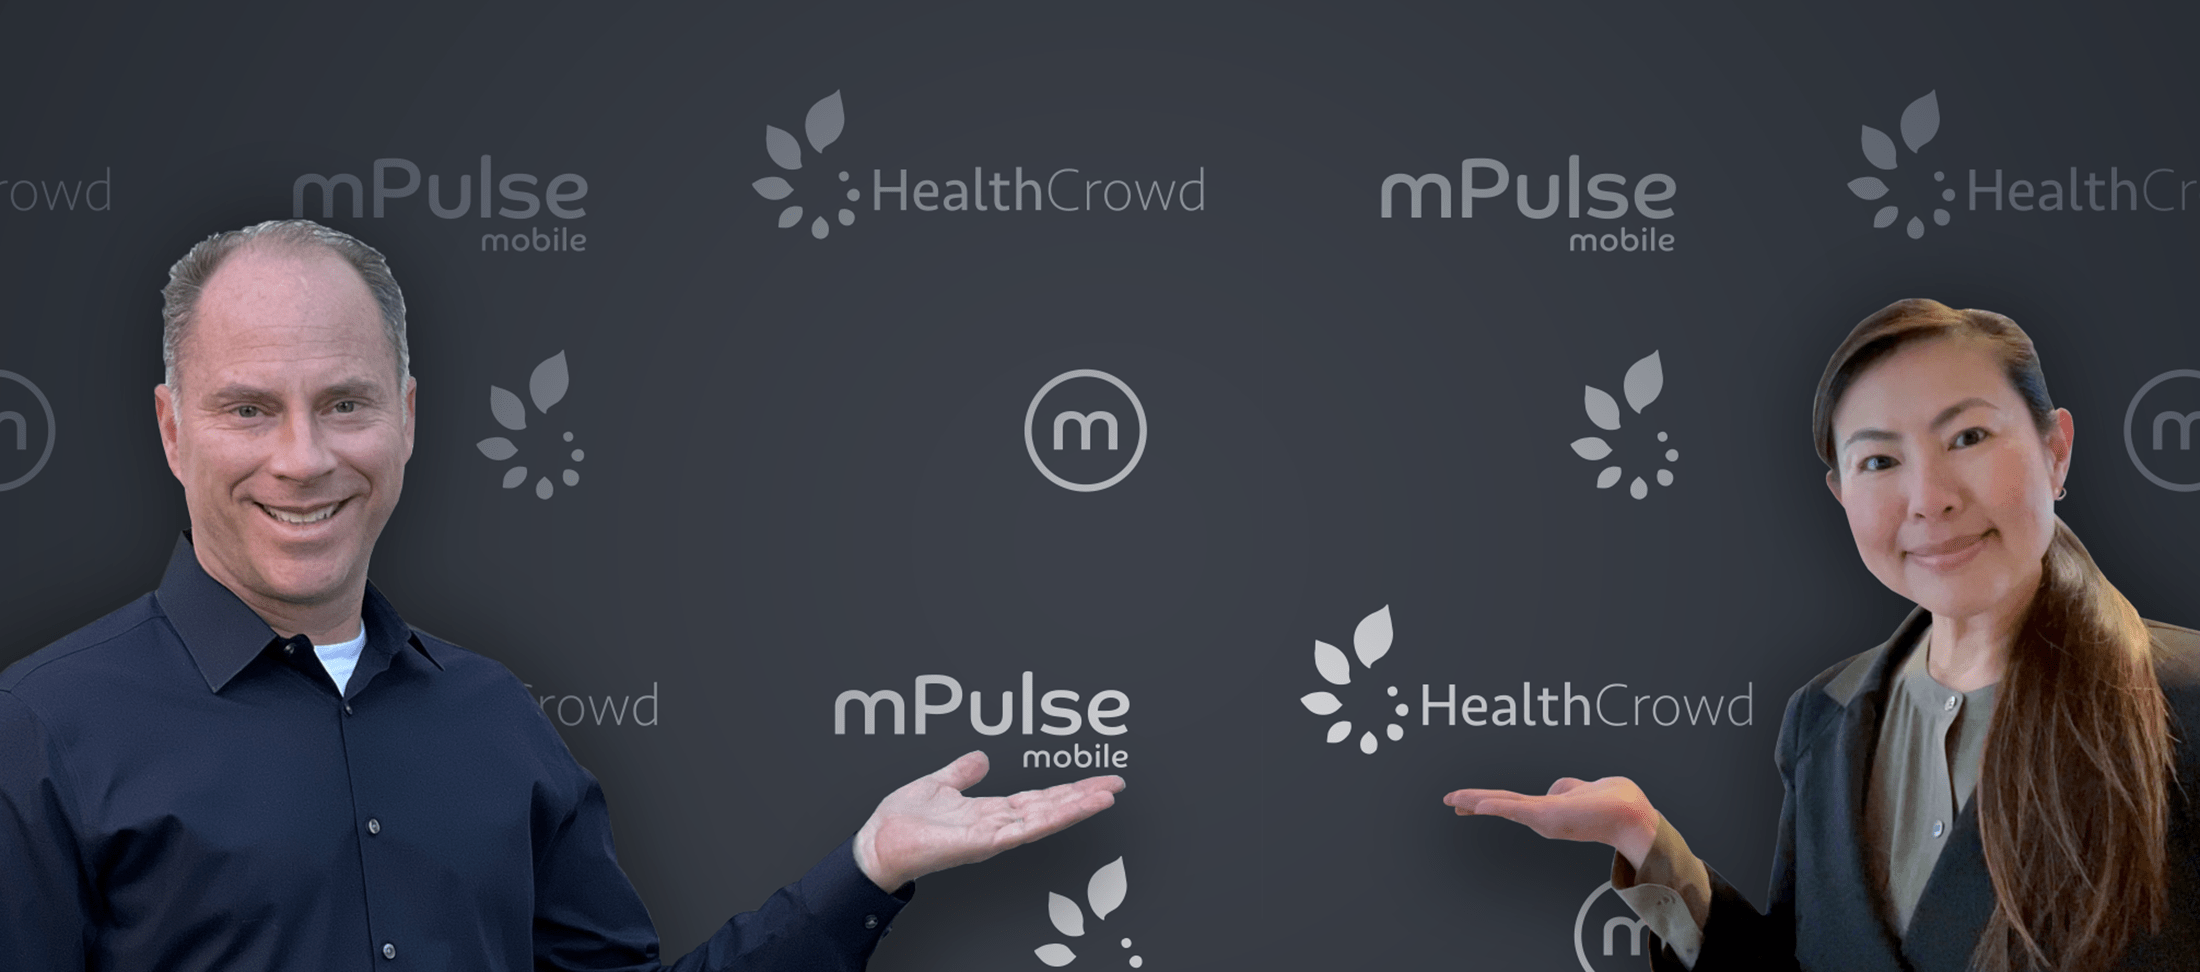 mPulse Mobile Acquires HealthCrowd